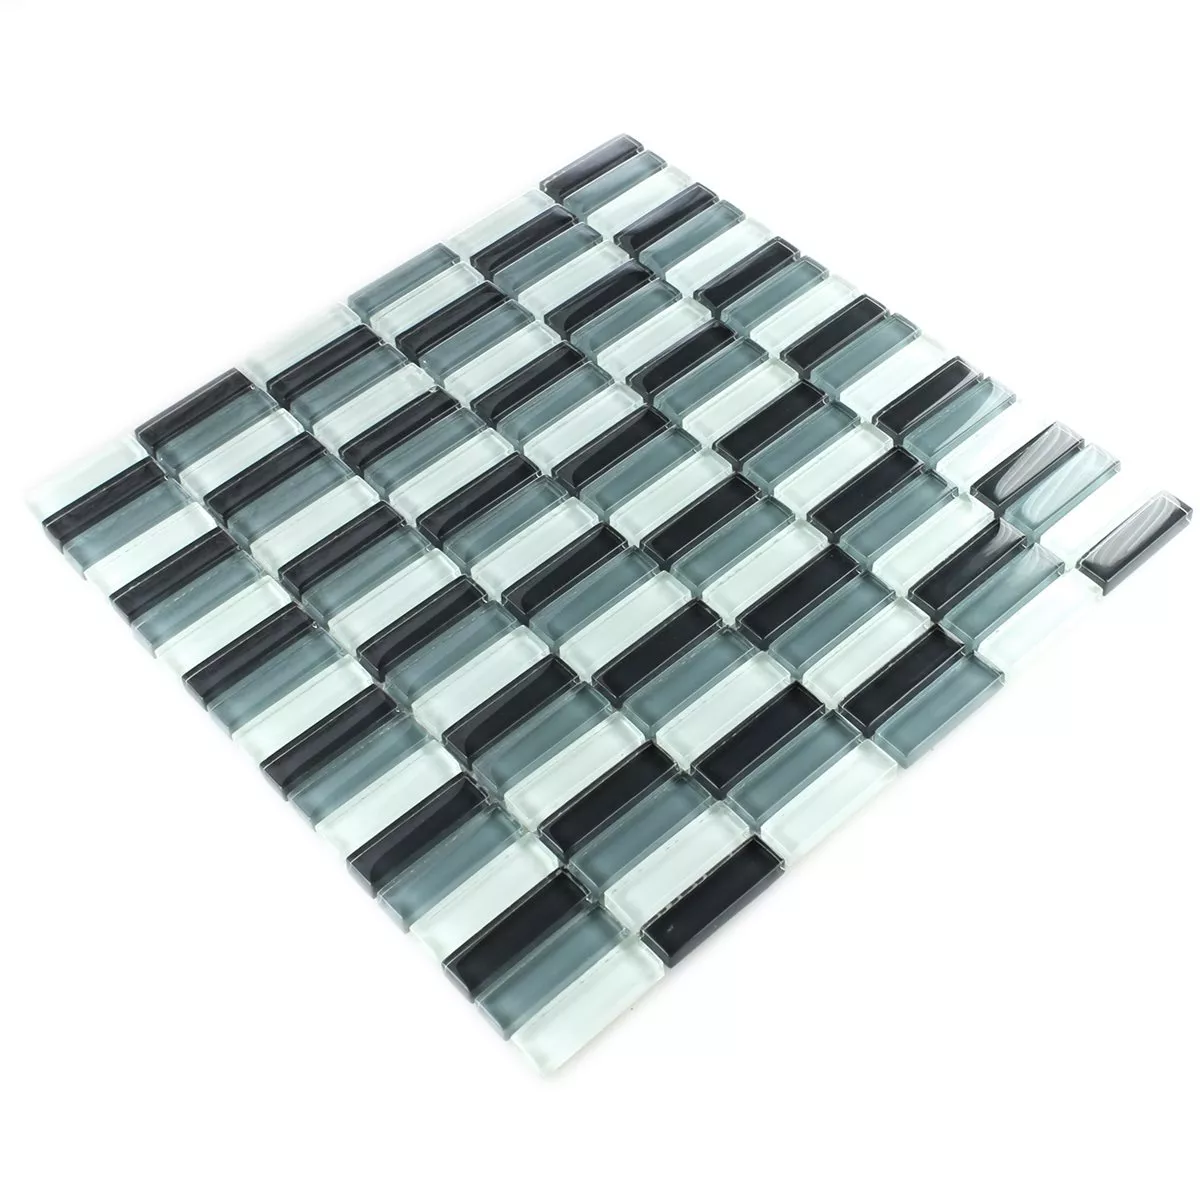 Mosaic Tiles Glass Sticks Grey Mix